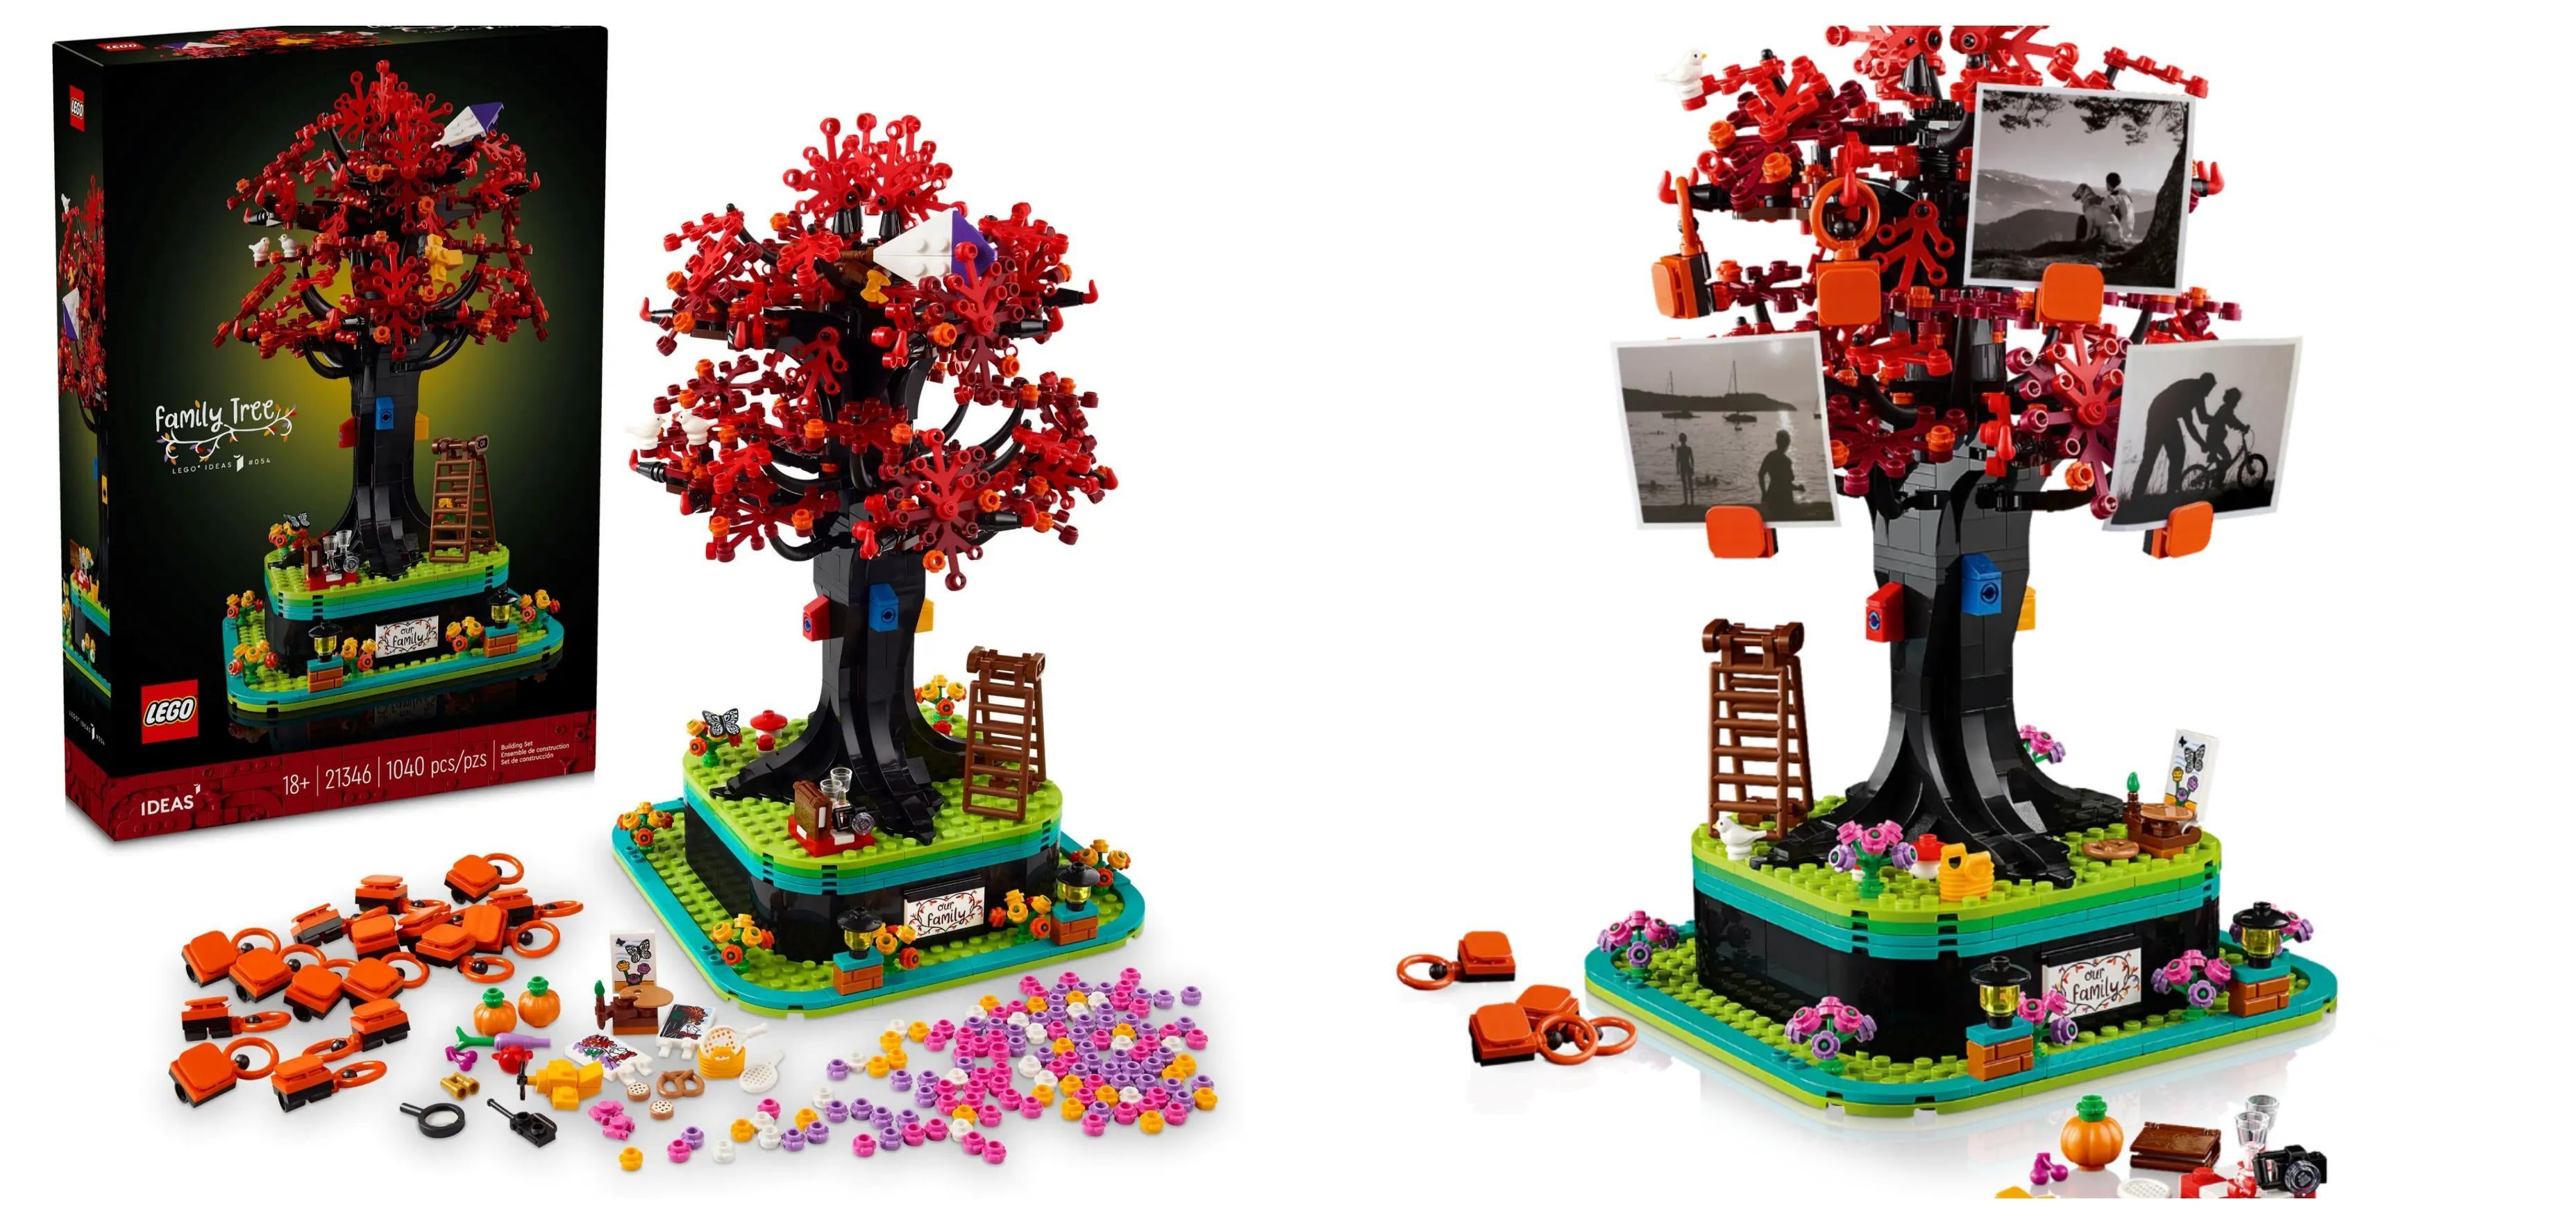 LEGO Ideas Family Tree Set Displays Photos and Mementos